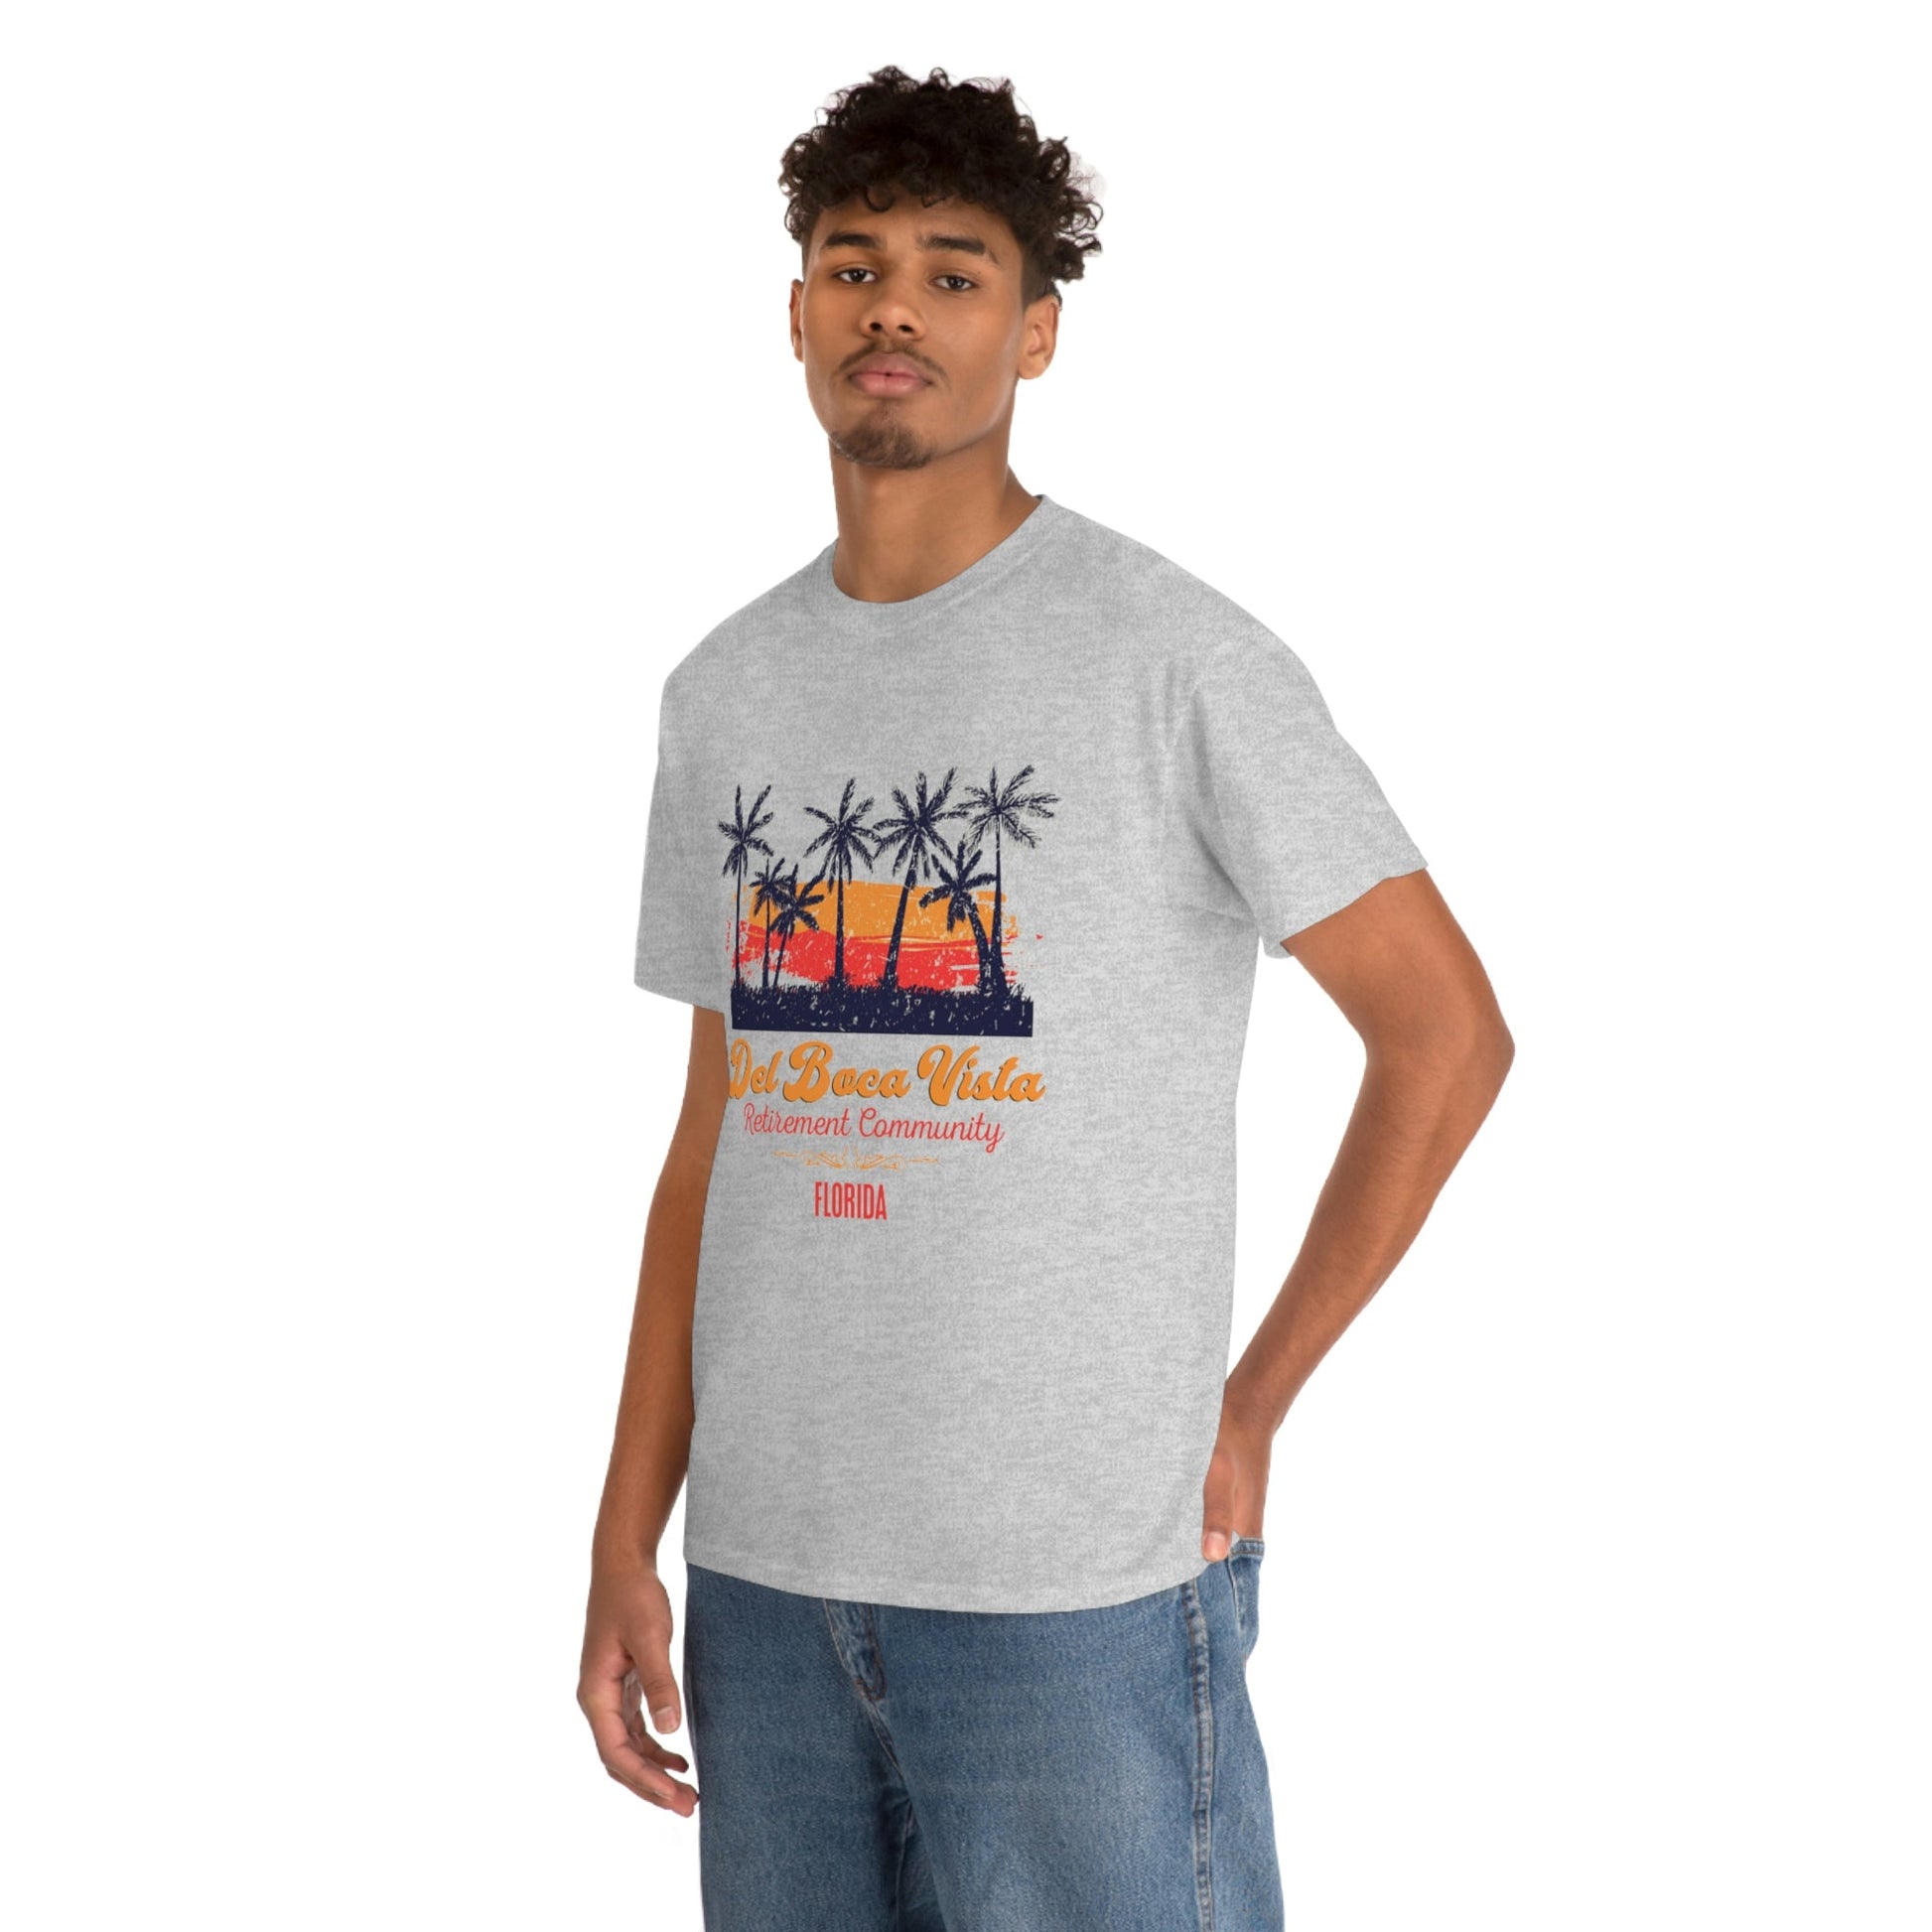 Del Boca Vista T-Shirts | Unisex Fitted Shirts | RetroTeeShop